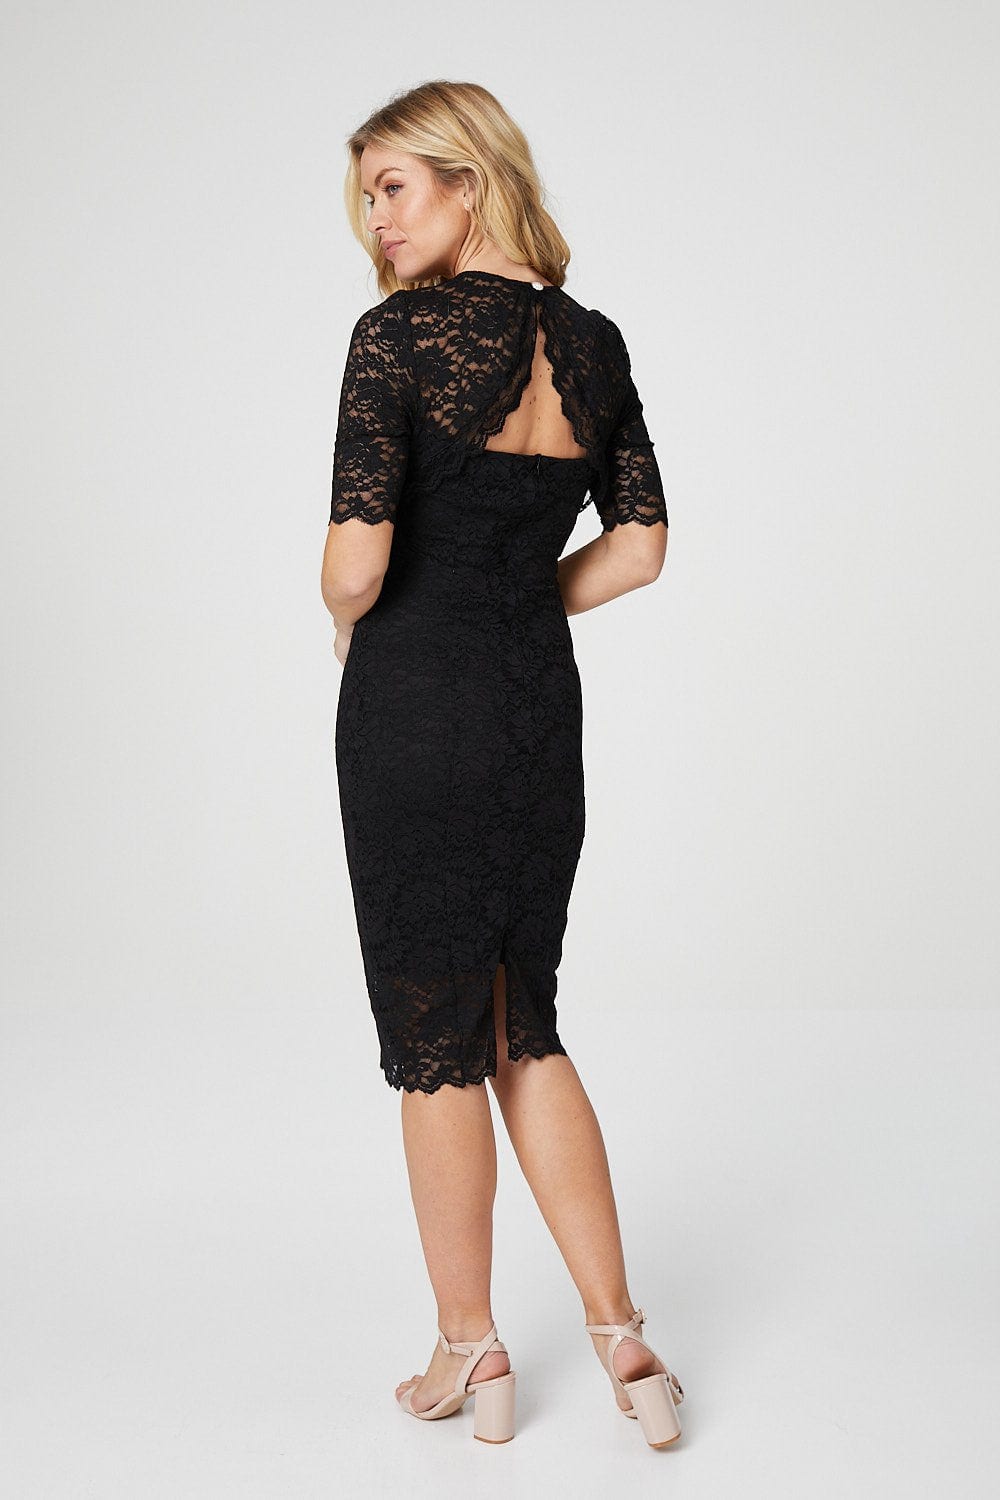 Black | Lace 1/2 Sleeve Bodycon Dress